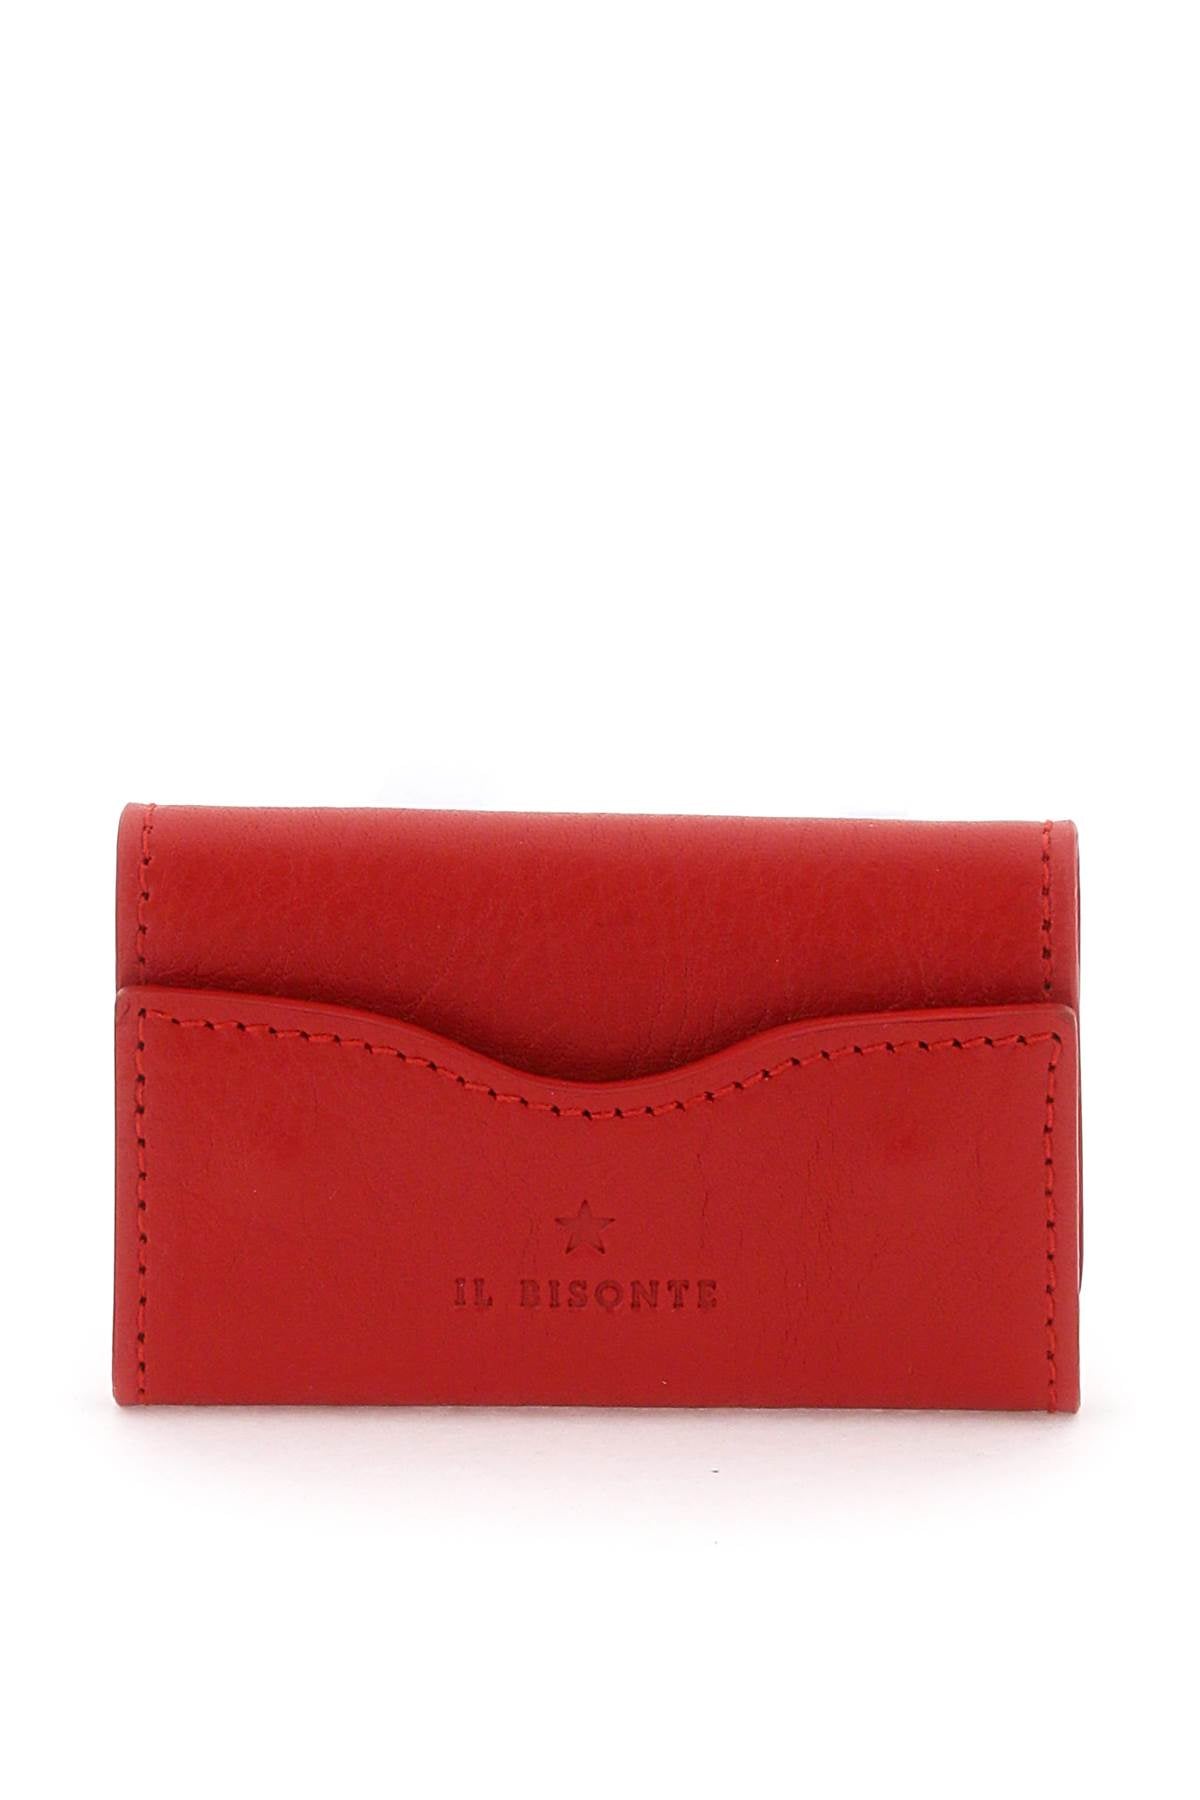 Il Bisonte Leather Key Holder   Red